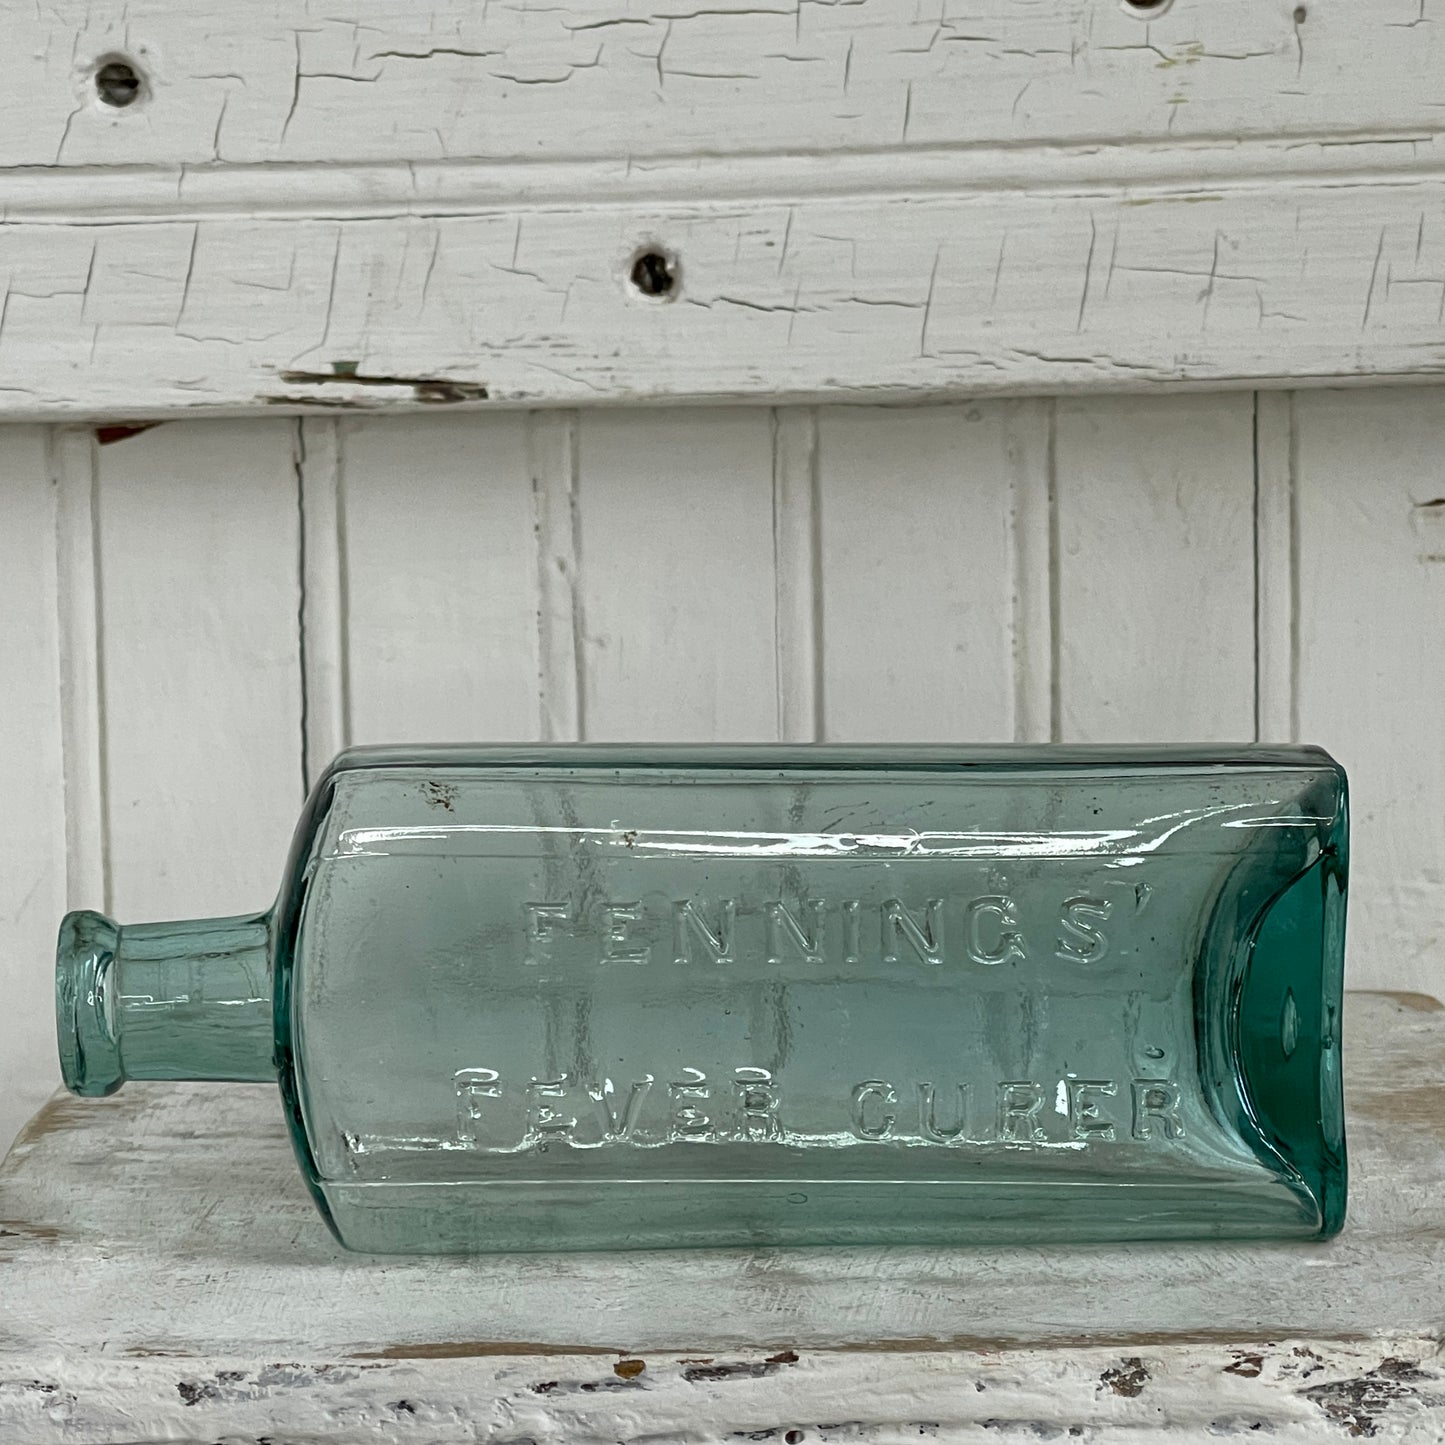 Antique Apothecary Bottle - Fenning's Fever Curer